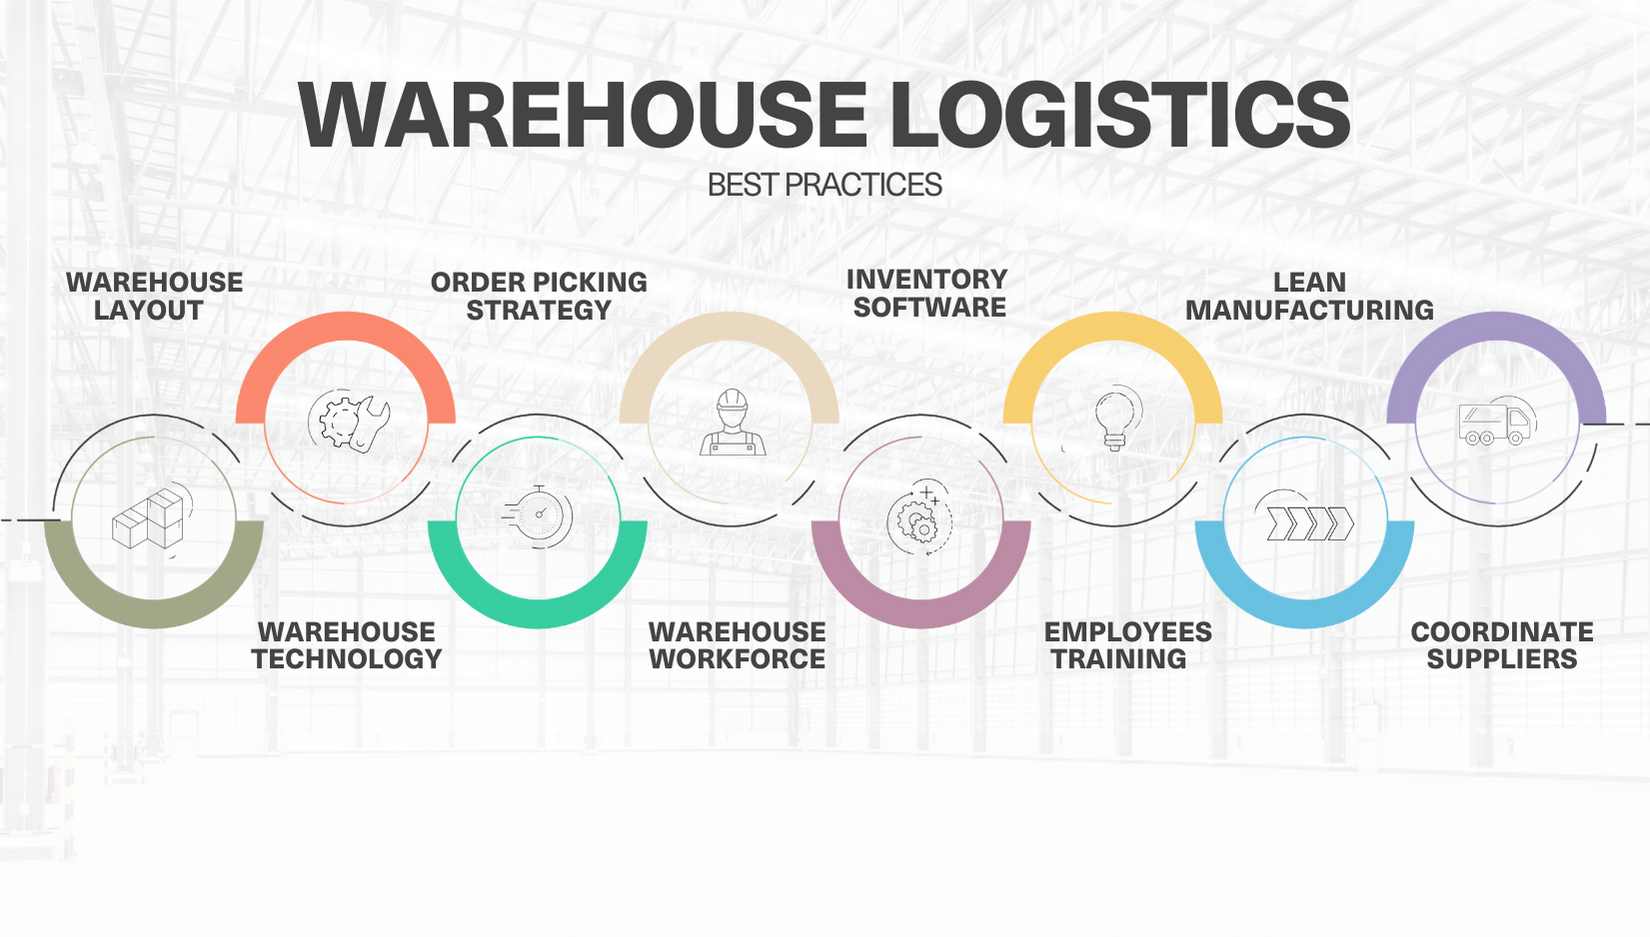 Warehouse logistics - BEST PRACTICES